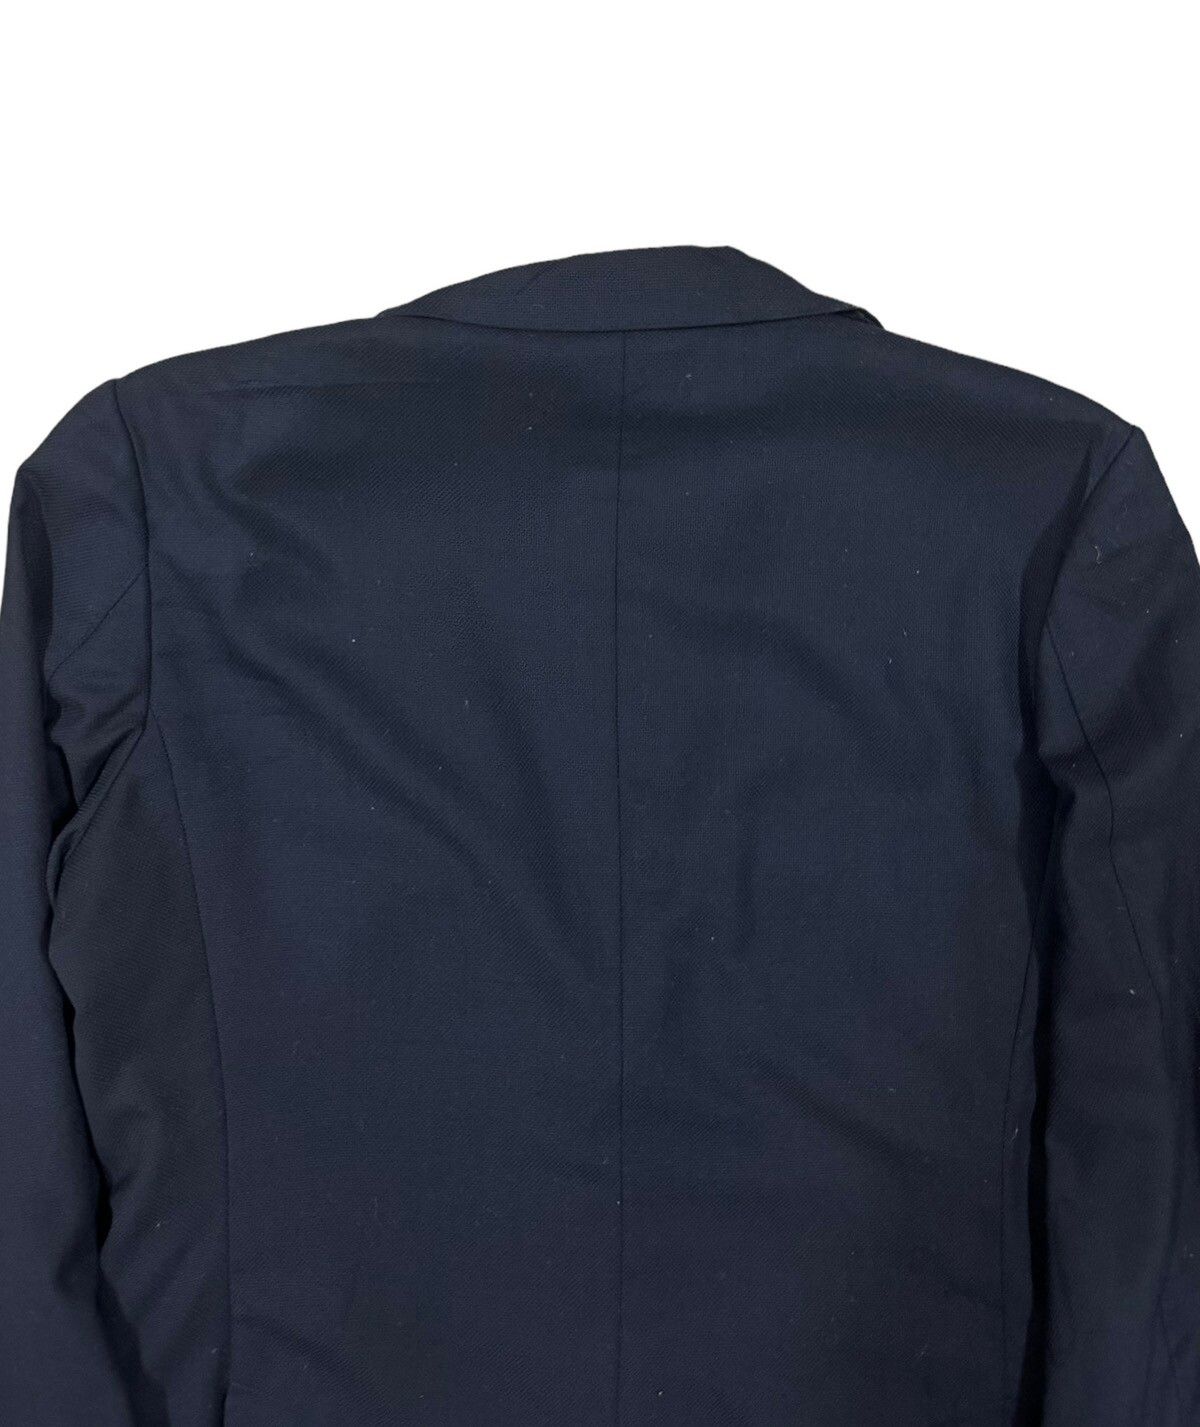 Mackintosh Philosophy Blazer Jacket Suit - 7